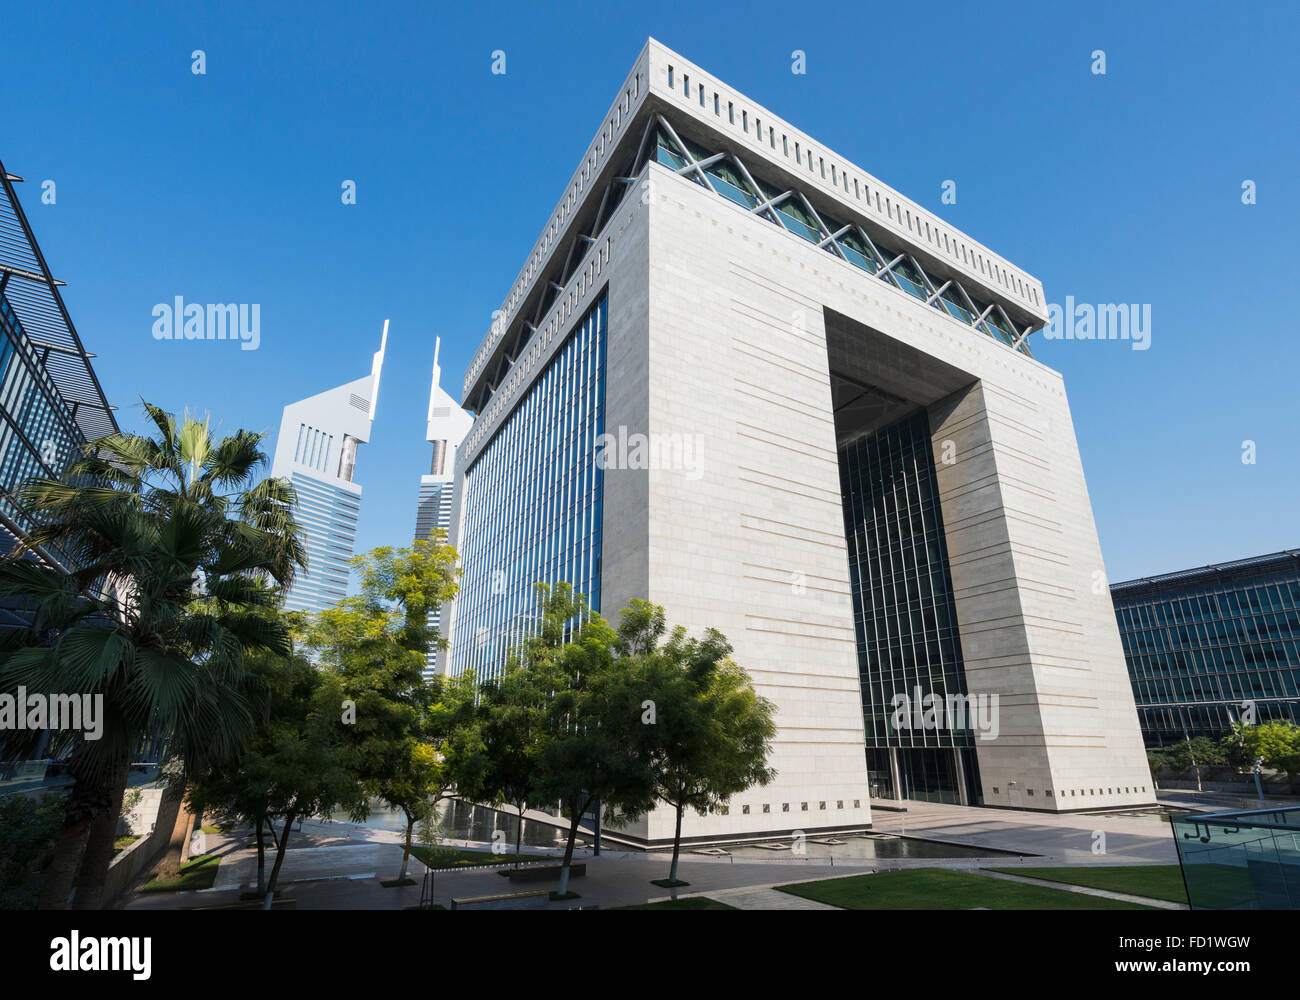 La puerta edificio en DIFC o el Centro Financiero Internacional de Dubai en Dubai, Emiratos Árabes Unidos EMIRATOS ÁRABES UNIDOS ORIENTE MEDIO Foto de stock